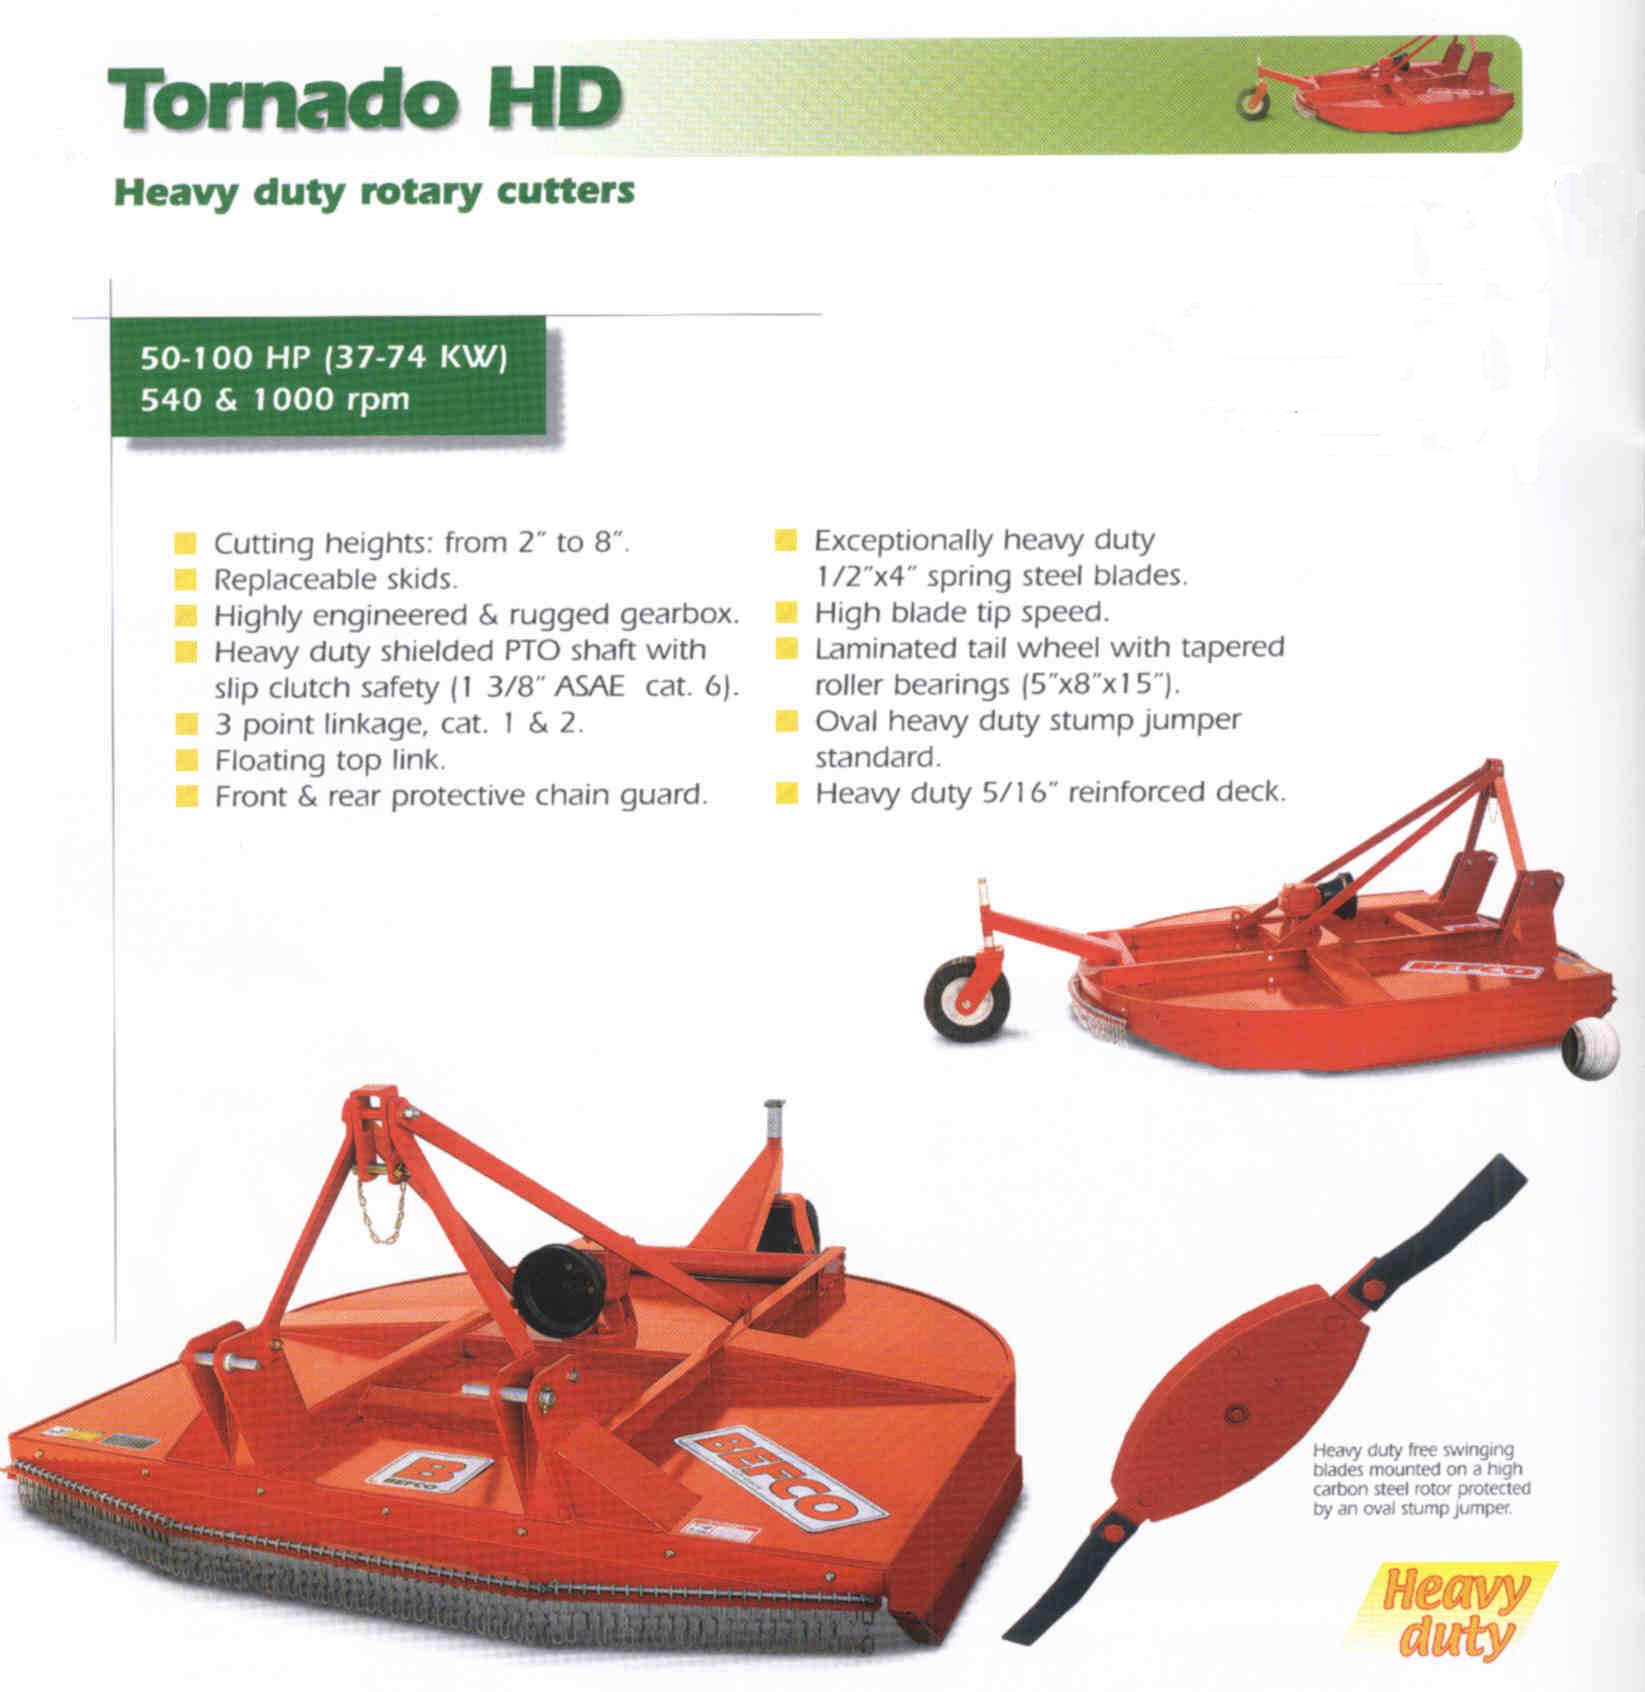 Tornado Heavy Duty Rotary Cutter